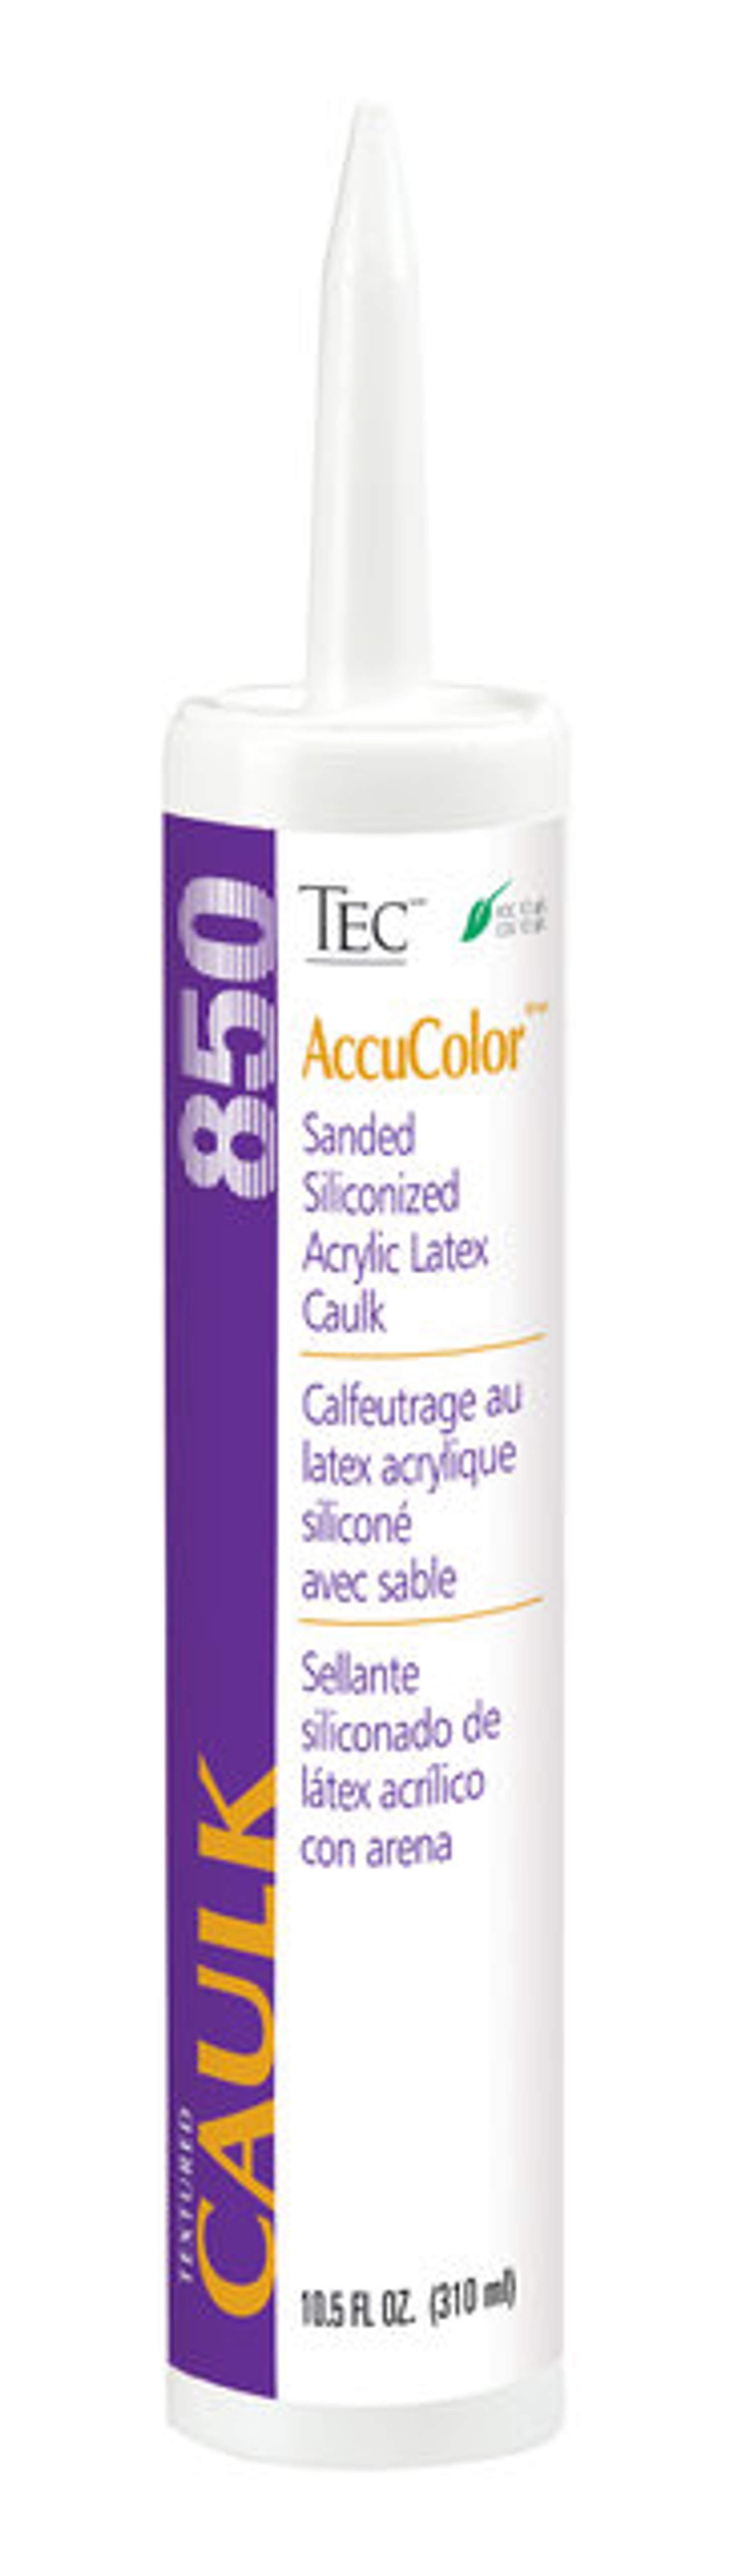 Tec AccuColor 850 Sanded Charcoal Gray #929 Caulk 10.3 Oz Tubes